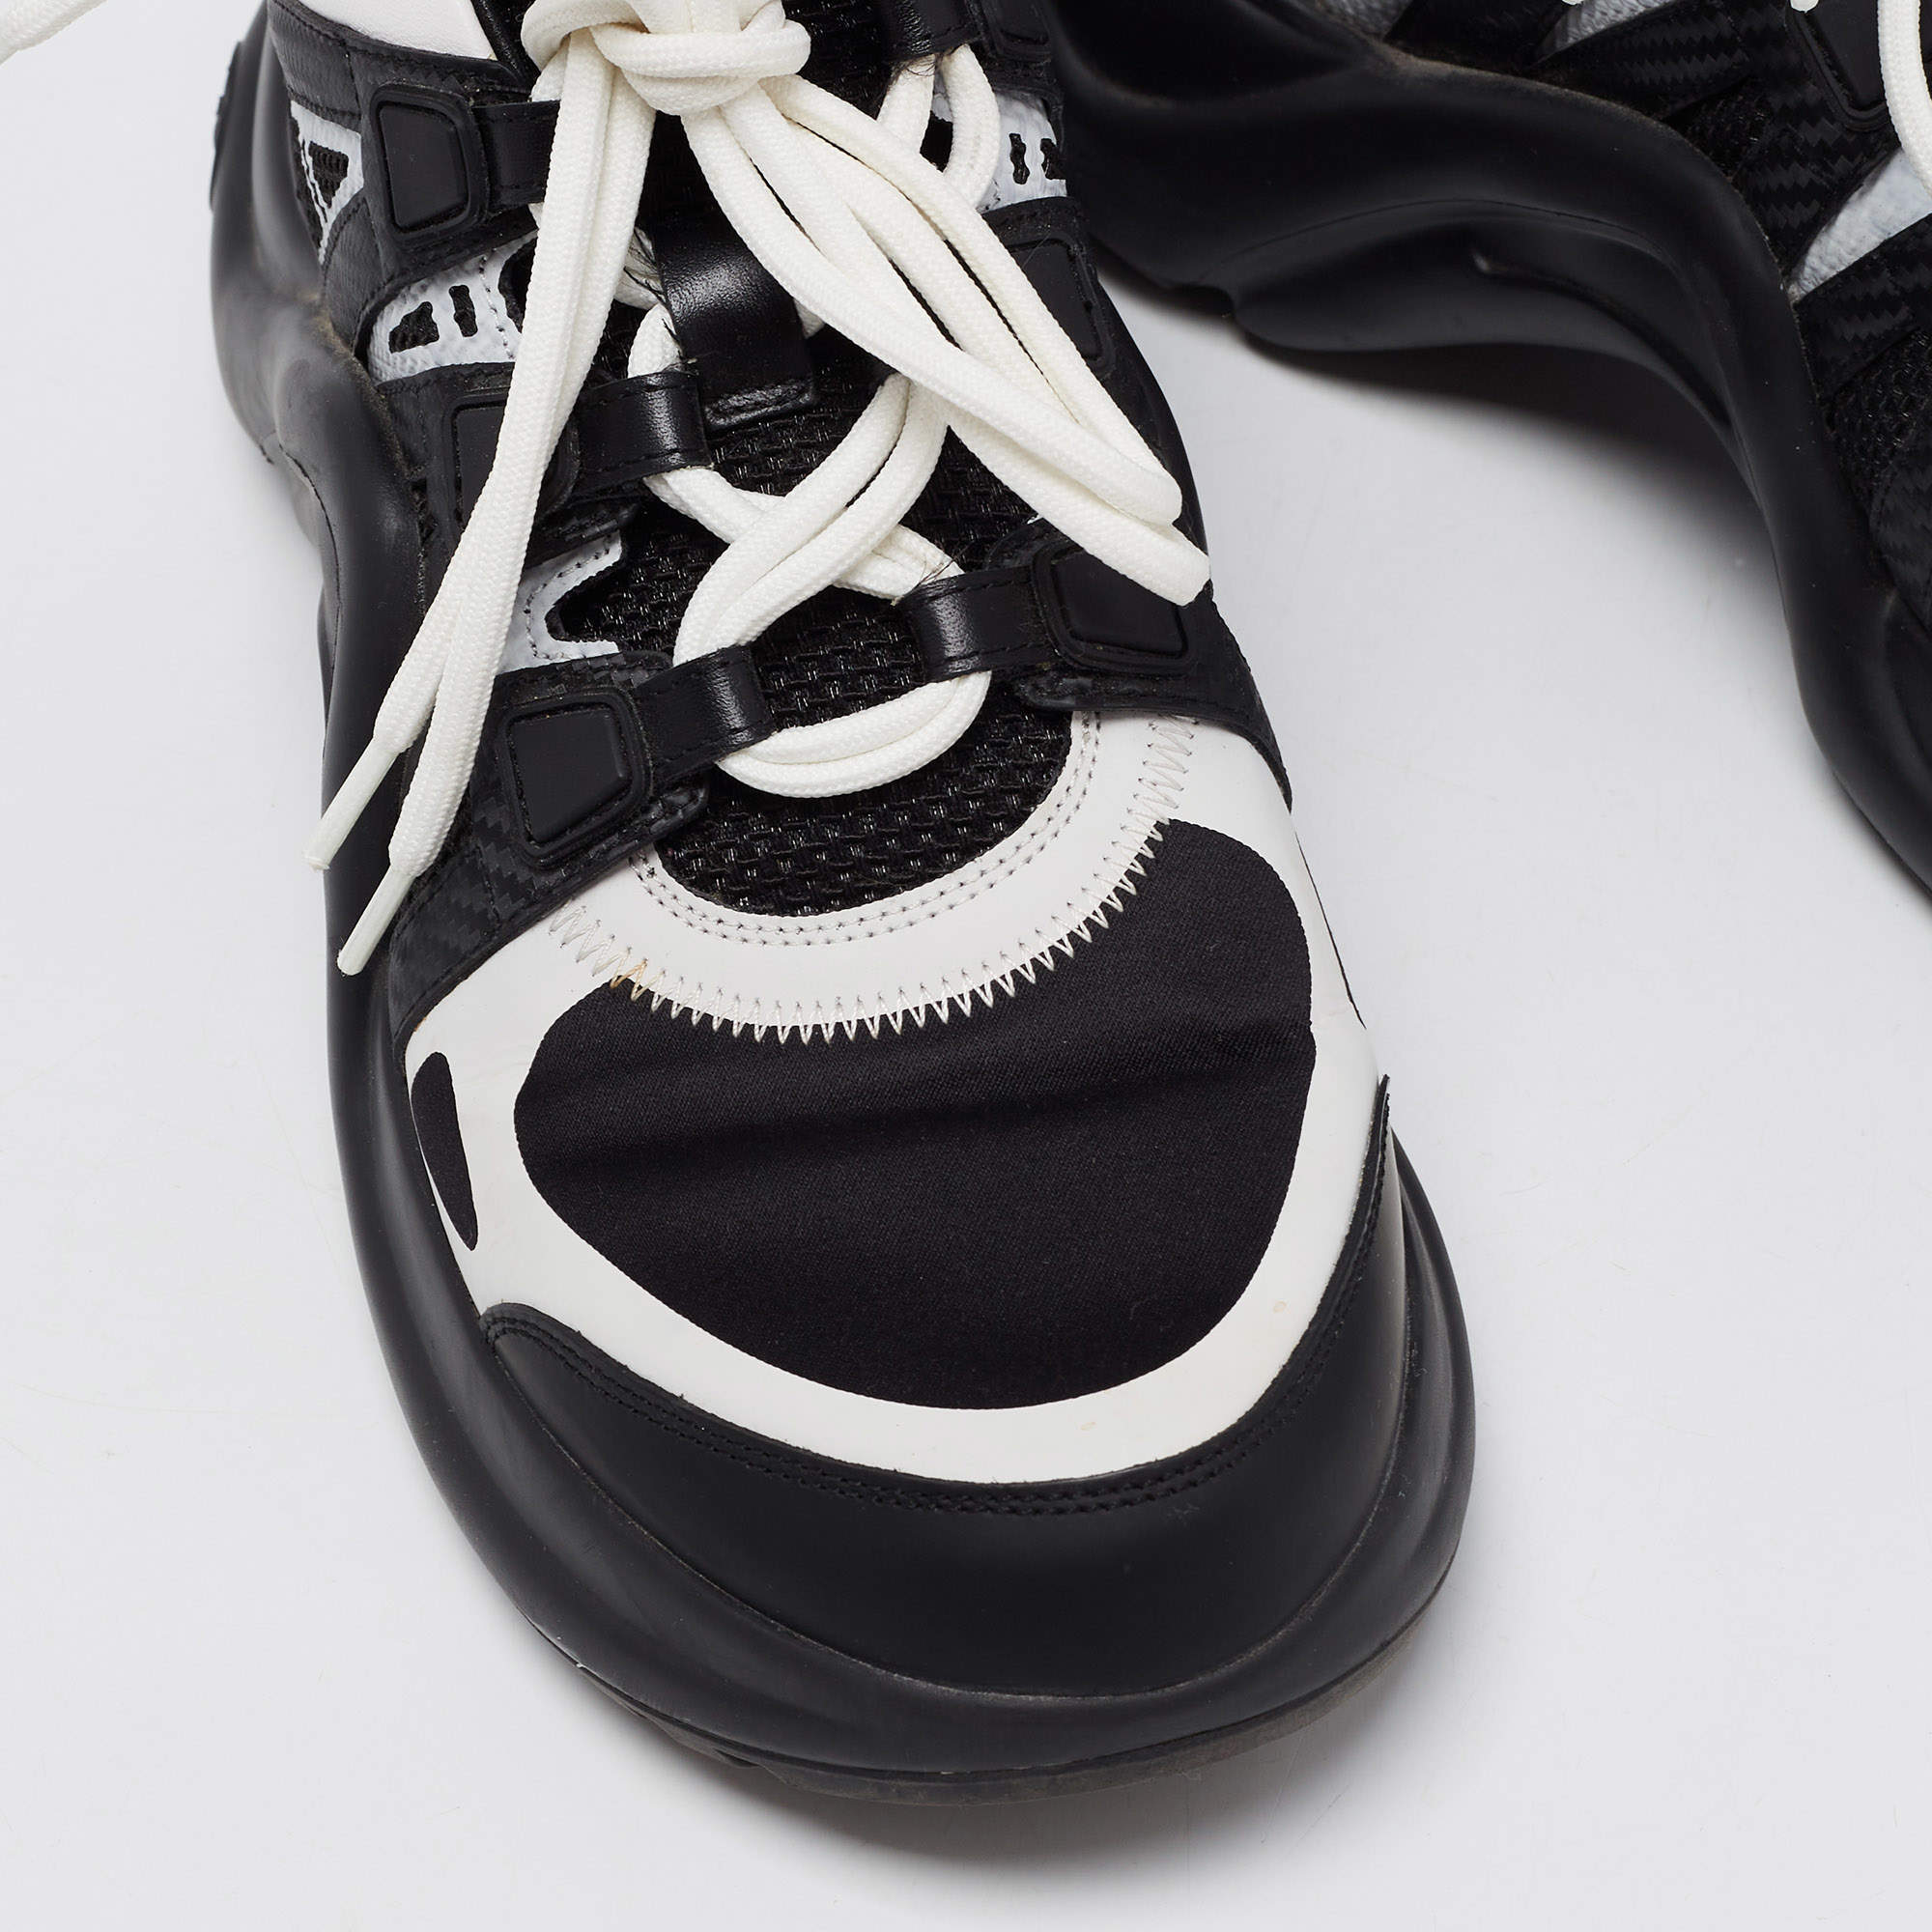 LOUIS VUITTON Calfskin Technical Nylon LV Archlight Sneakers 39 Black White  395232